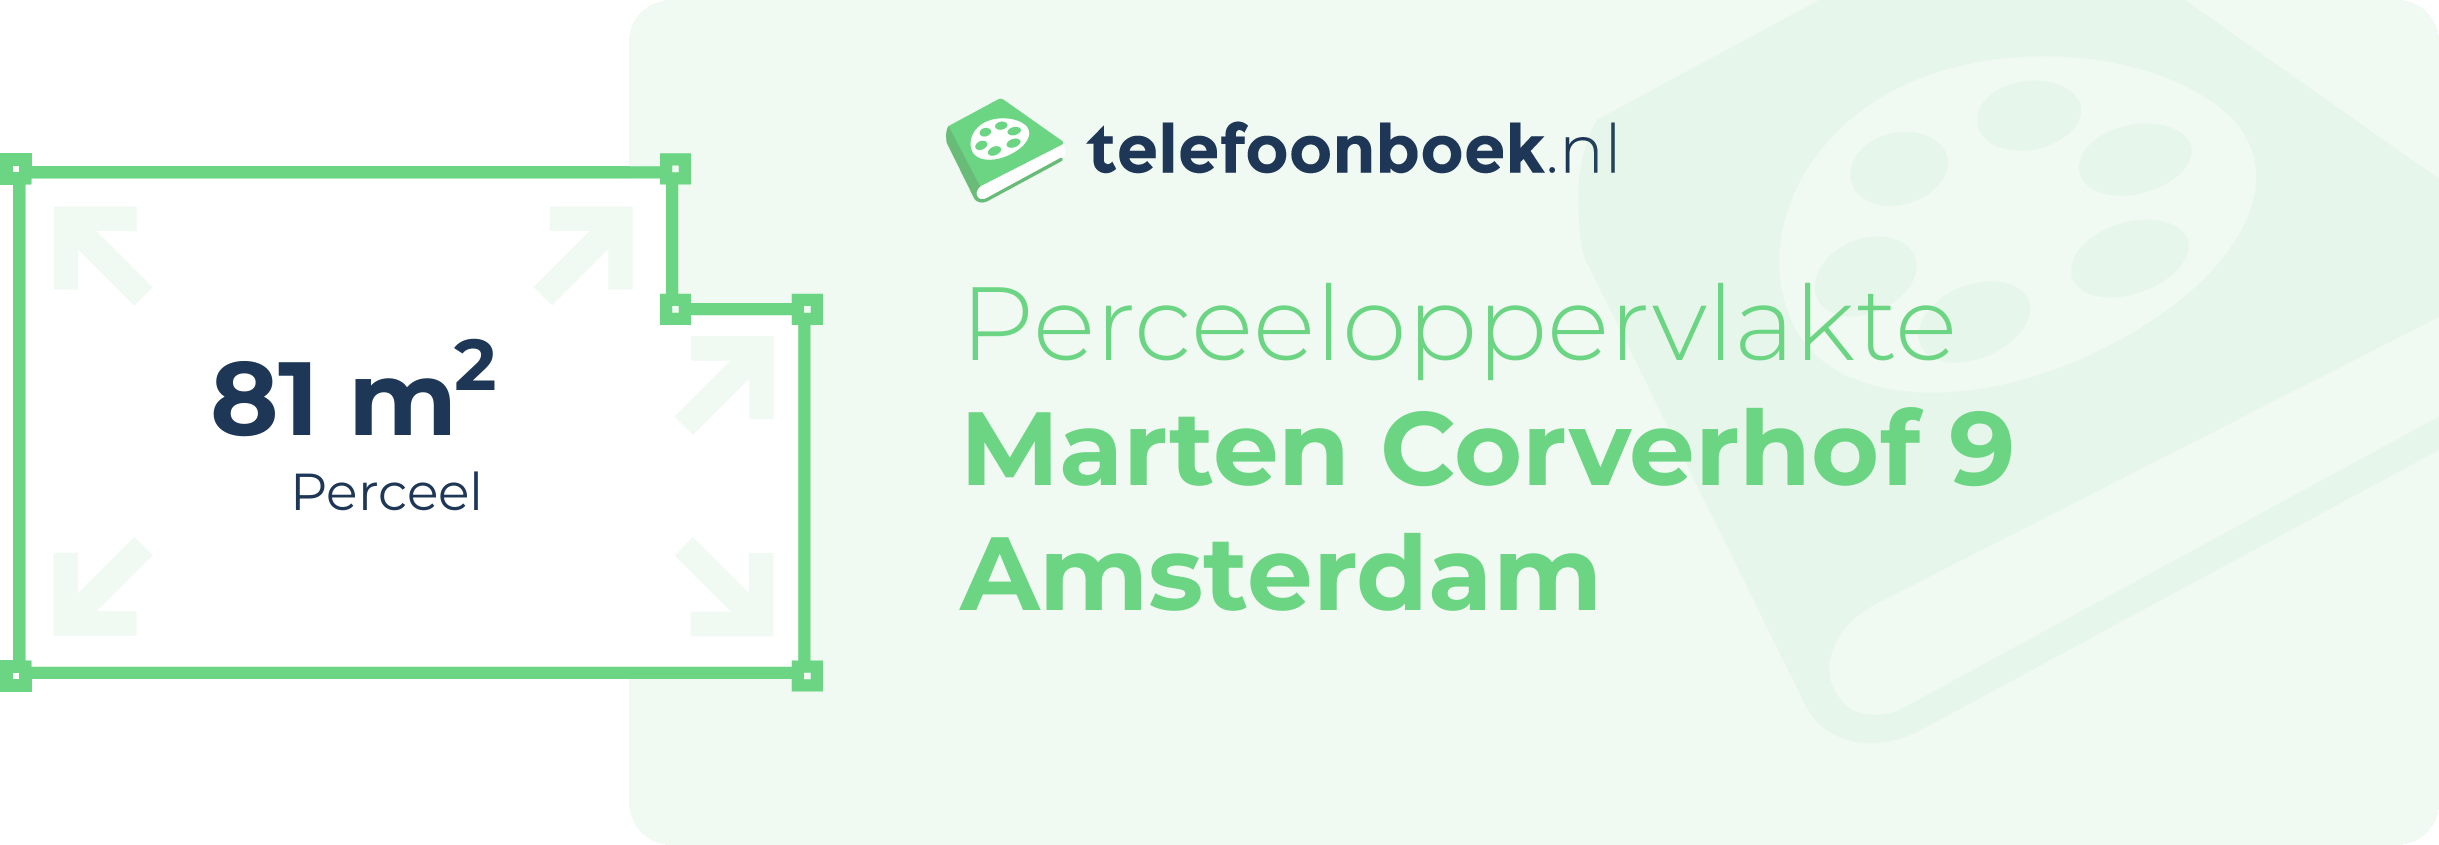 Perceeloppervlakte Marten Corverhof 9 Amsterdam